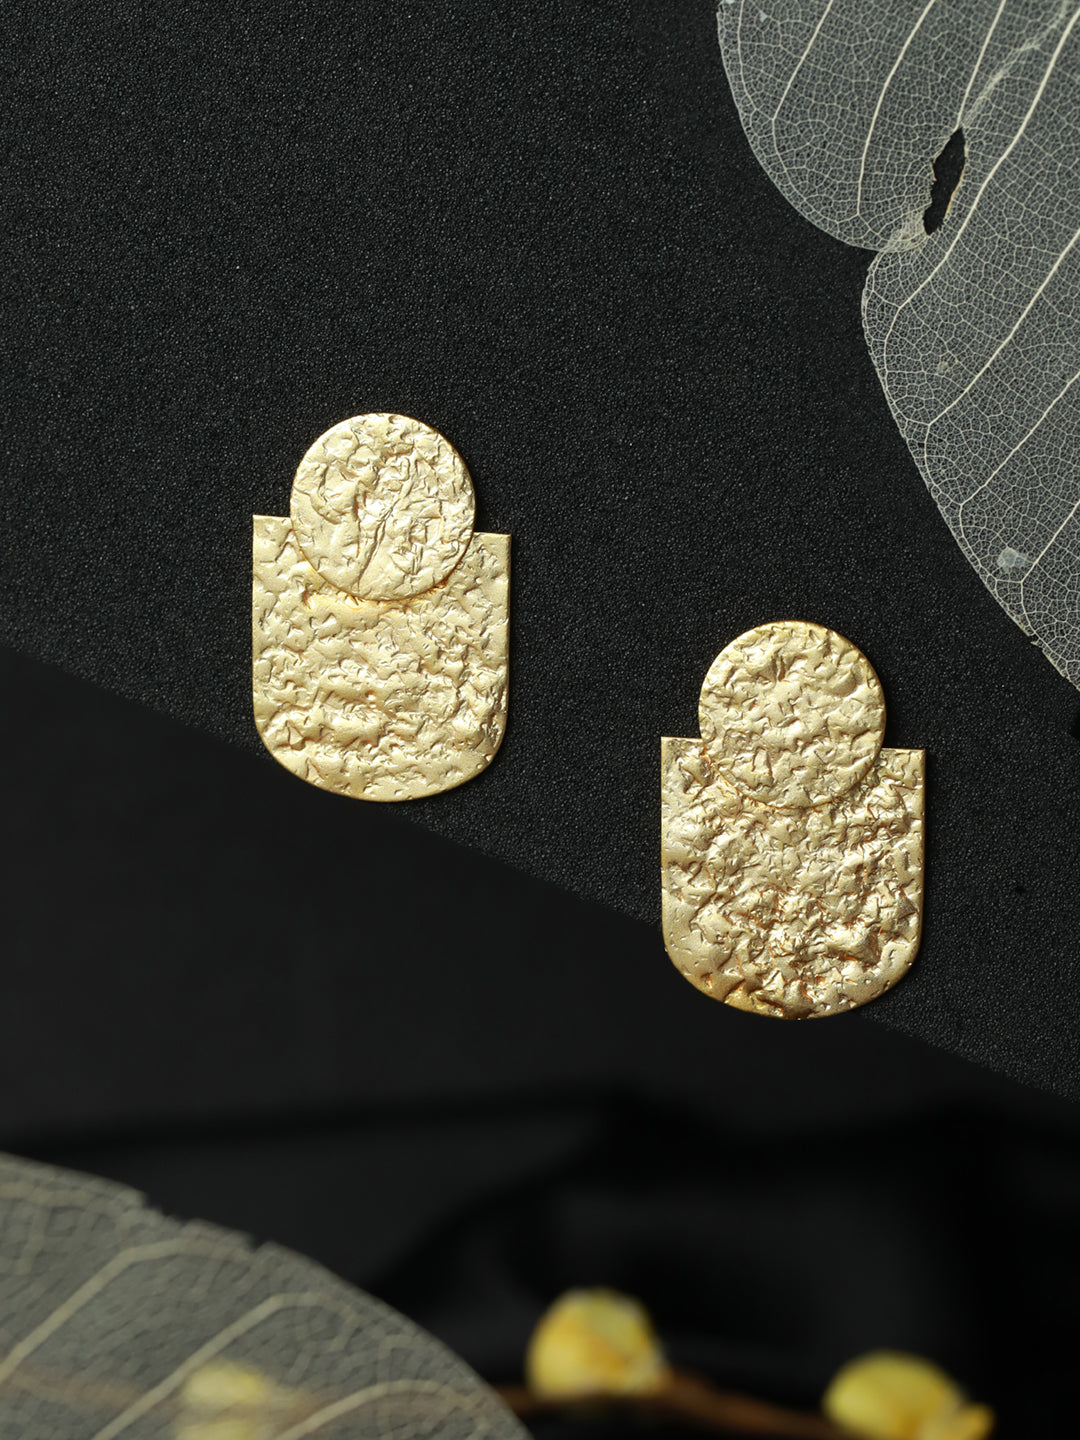 Priyaasi Hammered Geometric Gold Plated Earrings